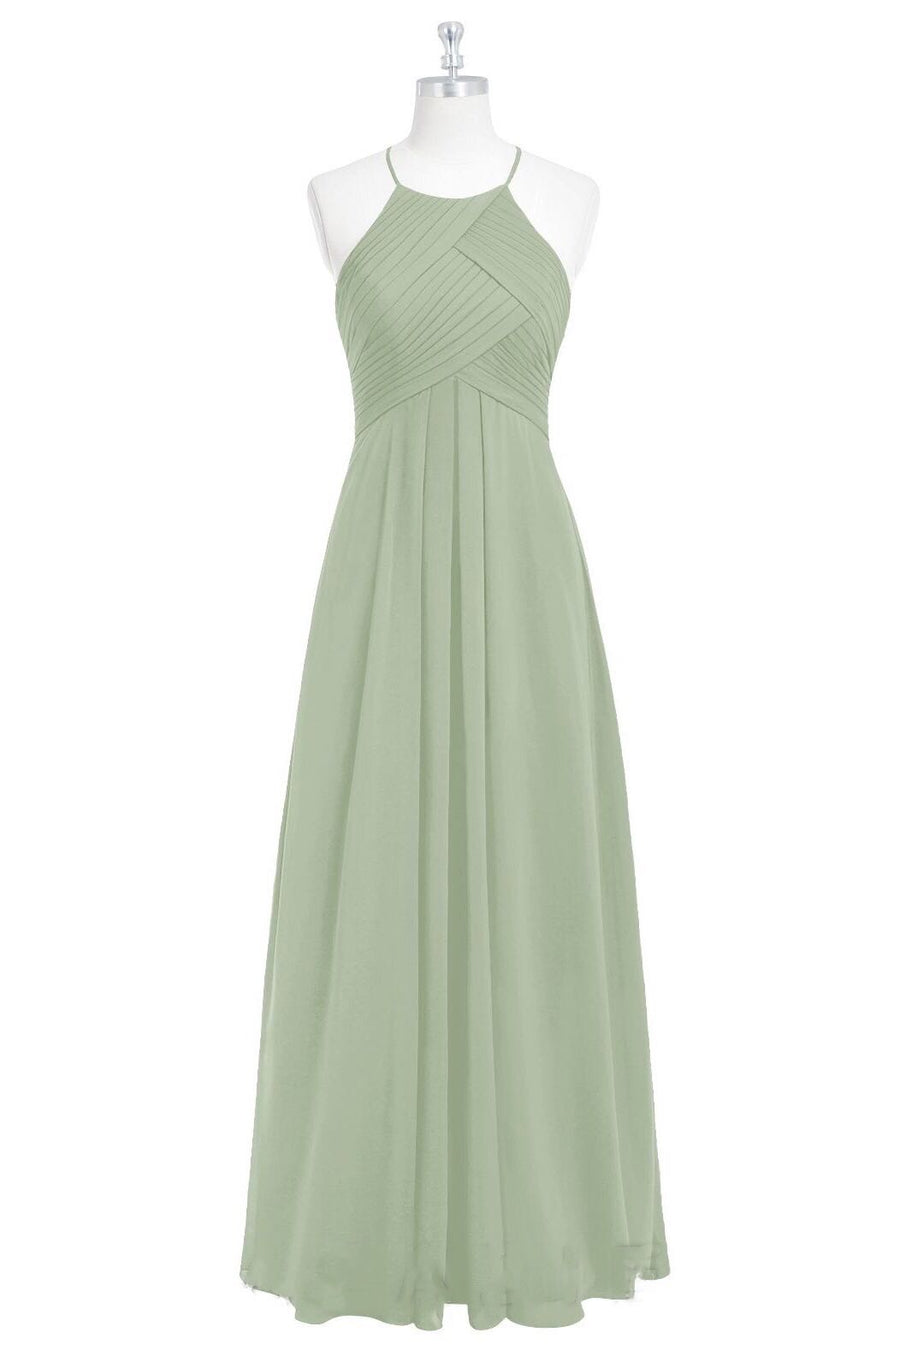 Sage Green Halter A-Line Long Bridesmaid Dress